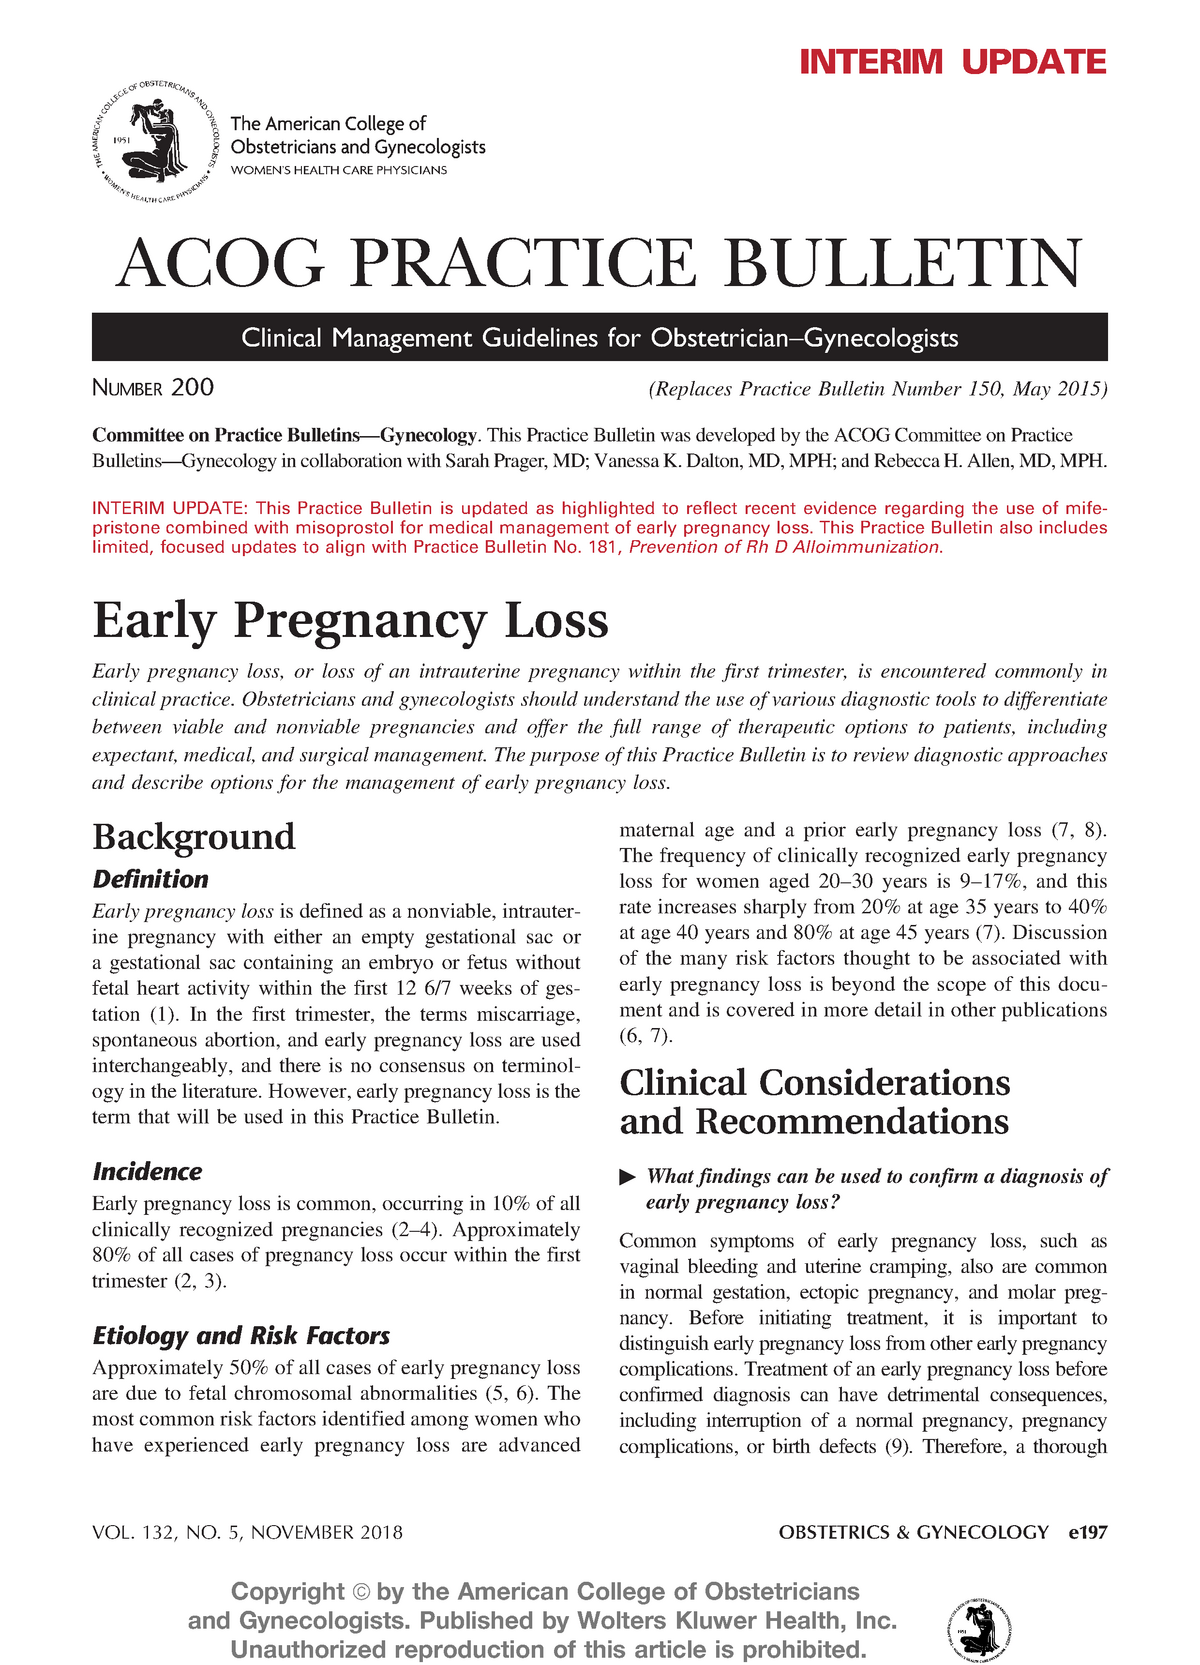 ACOG diagnostic criteria of premenstrual syndrome (n =89